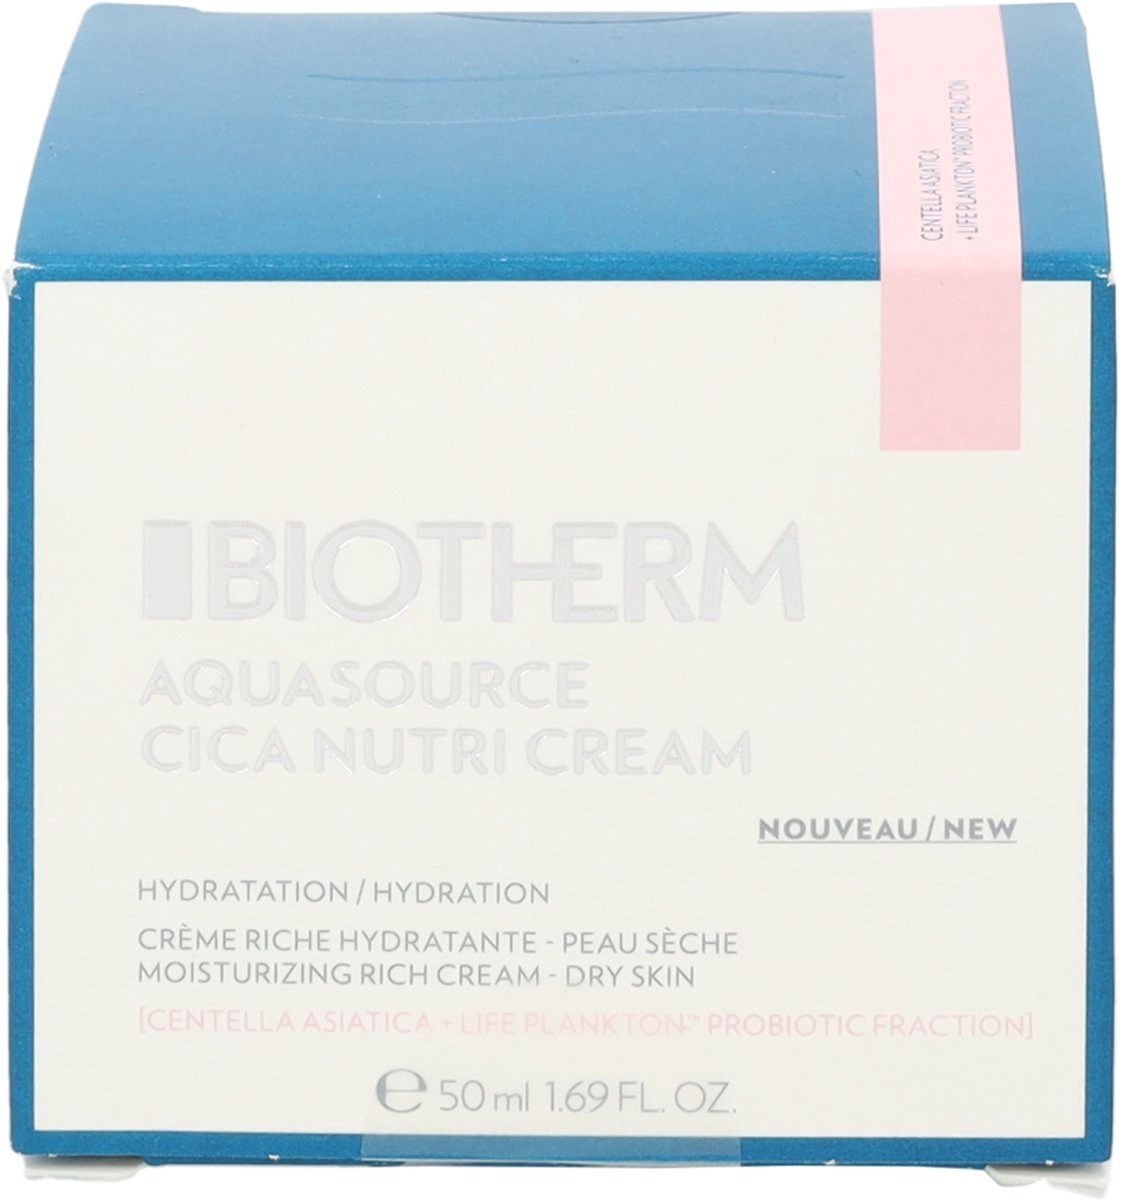 Biotherm Aquasource Dry Skin Face Cream - 50 ml - Packaging damaged